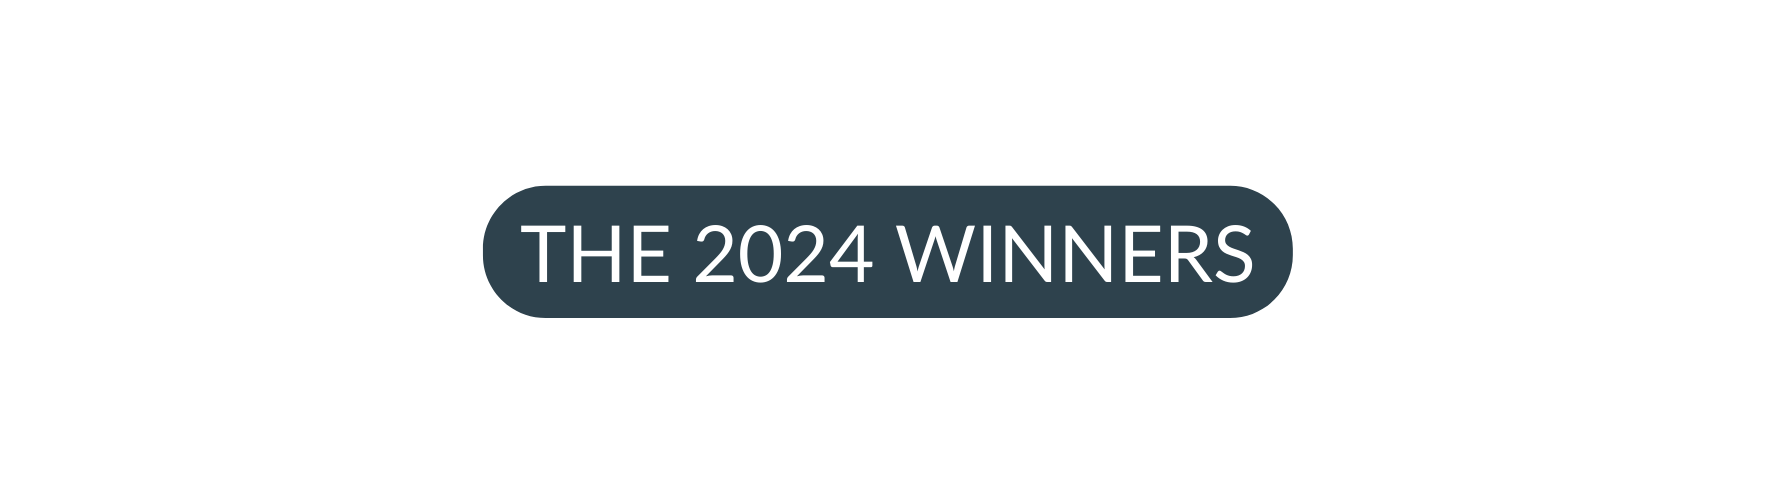 the 2024 WINNERS